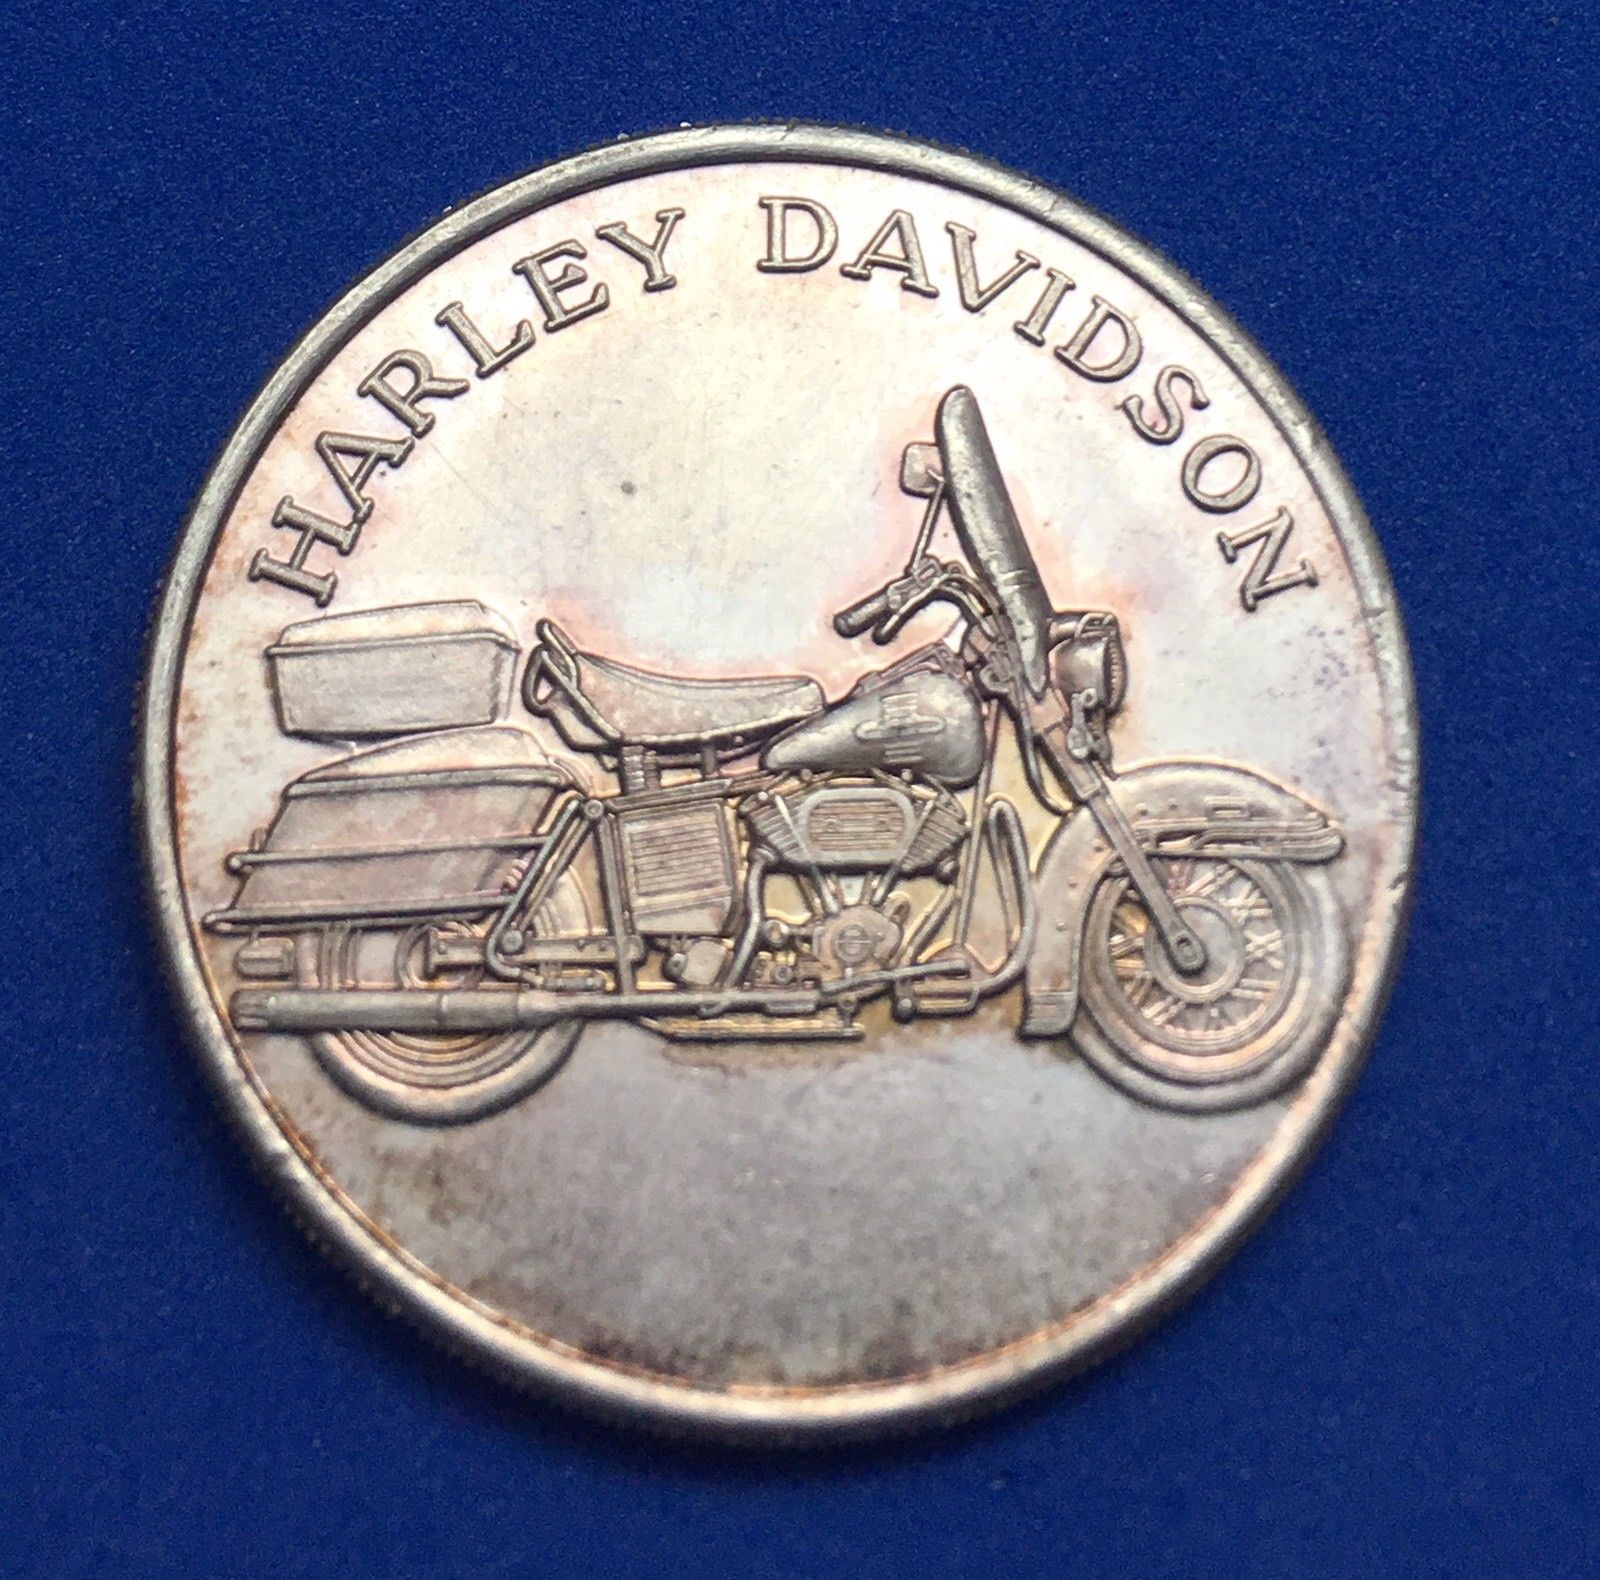 HARLEY DAVIDSON MOTORCYCLE 1 OZ .999 FINE SILVER ART BAR /ROUND - RARE!